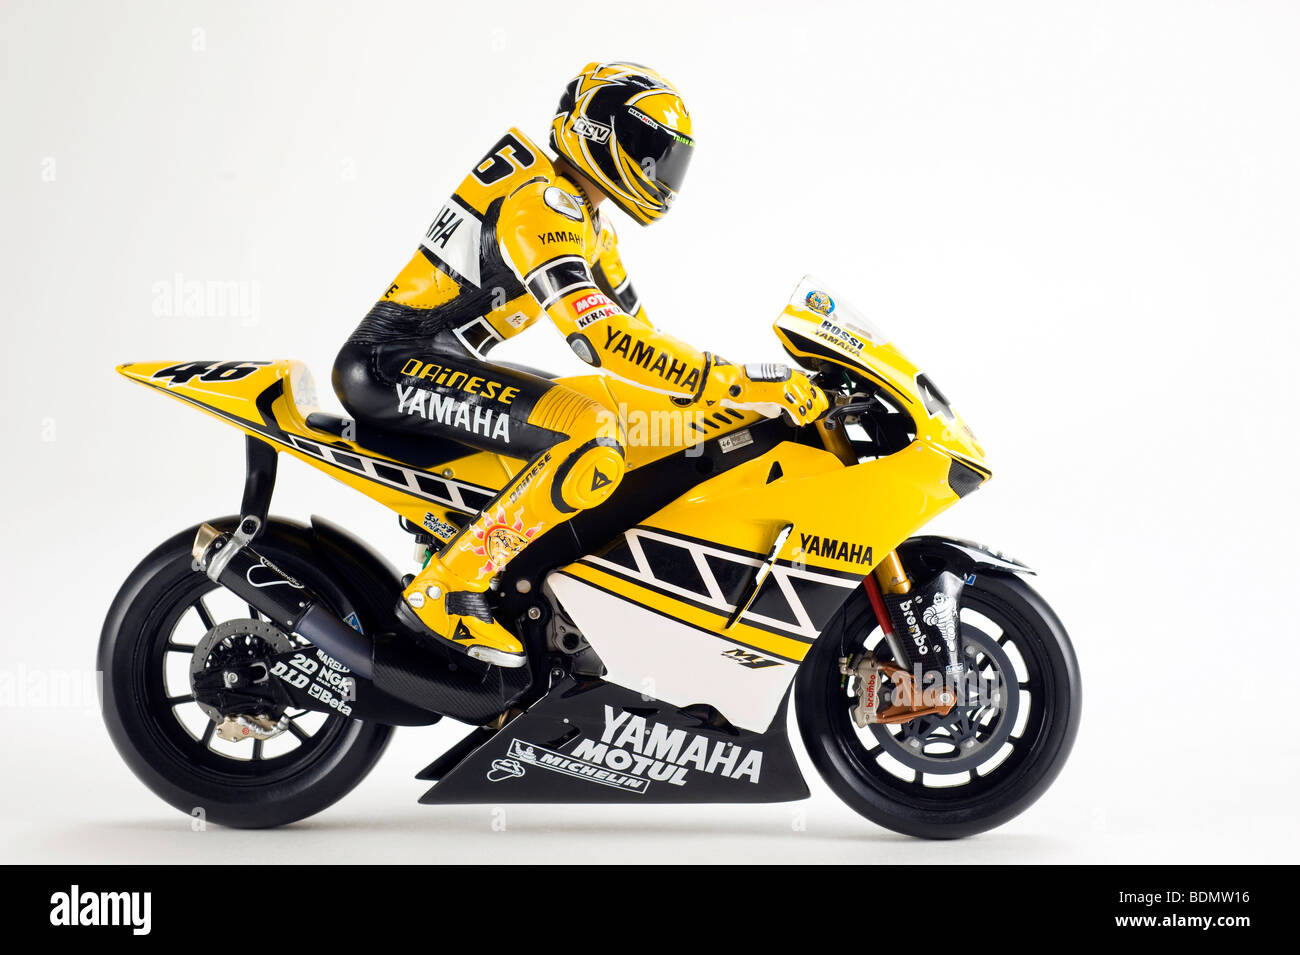 Modell von Yamaha racing Motorrad, Valentino Rossi Figur Stockfoto